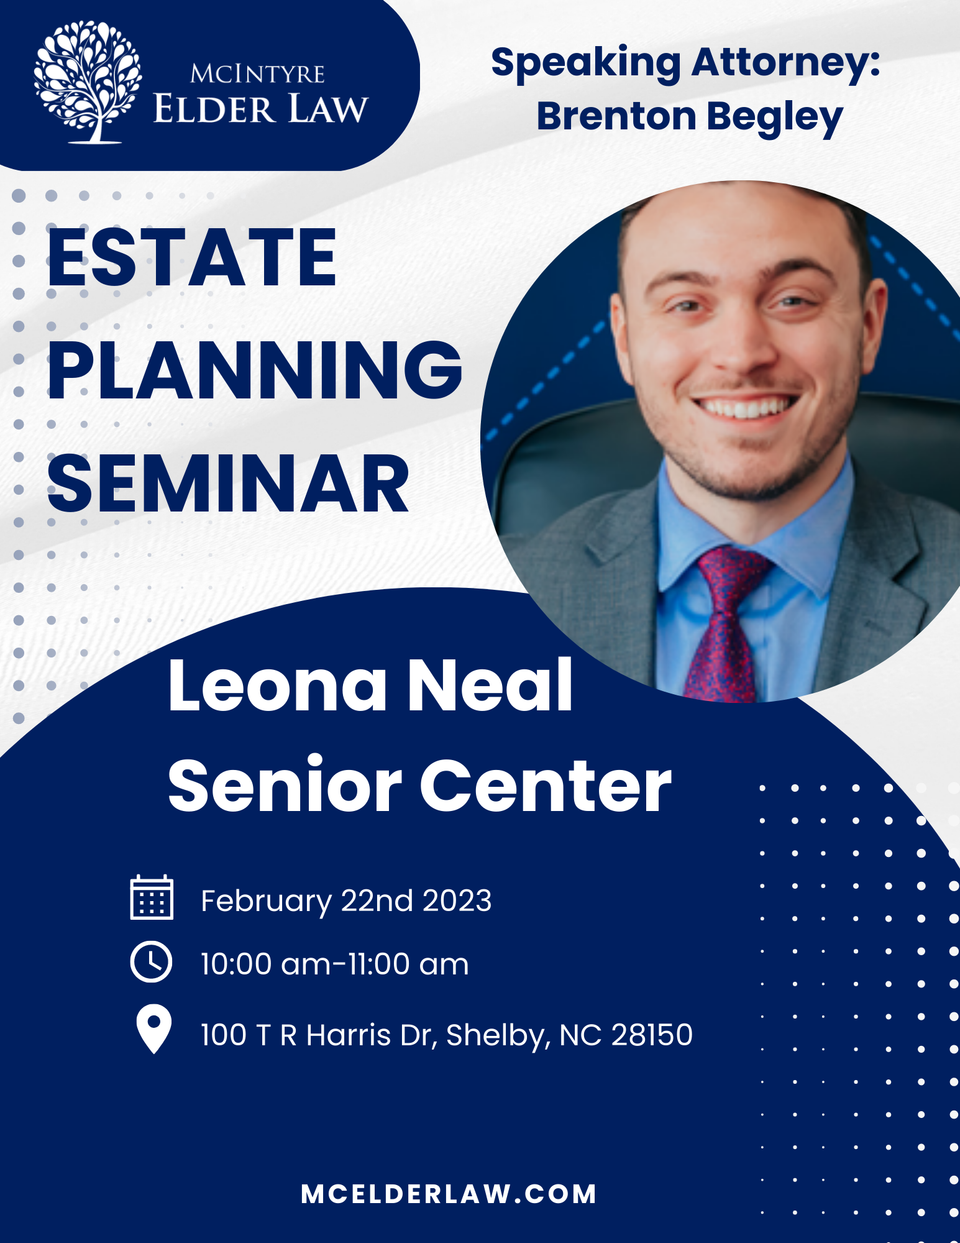 Estate planning seminar at leona neal center center 2.22. 23